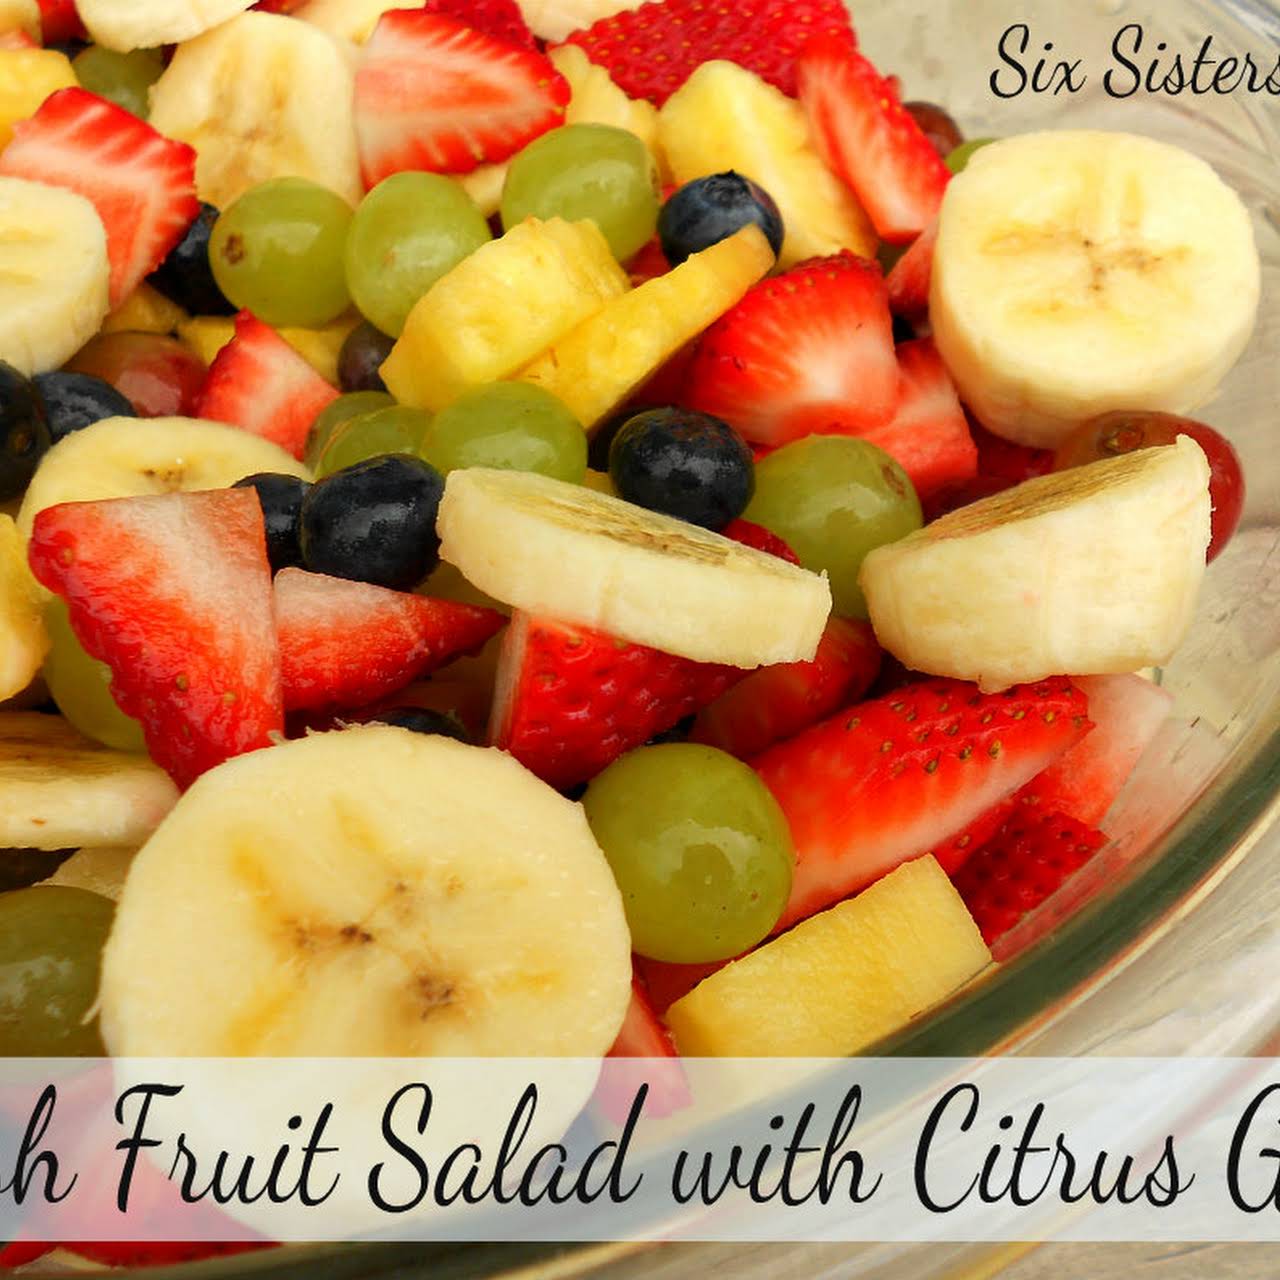  spacious Fruit Salad with Citrus Glaze